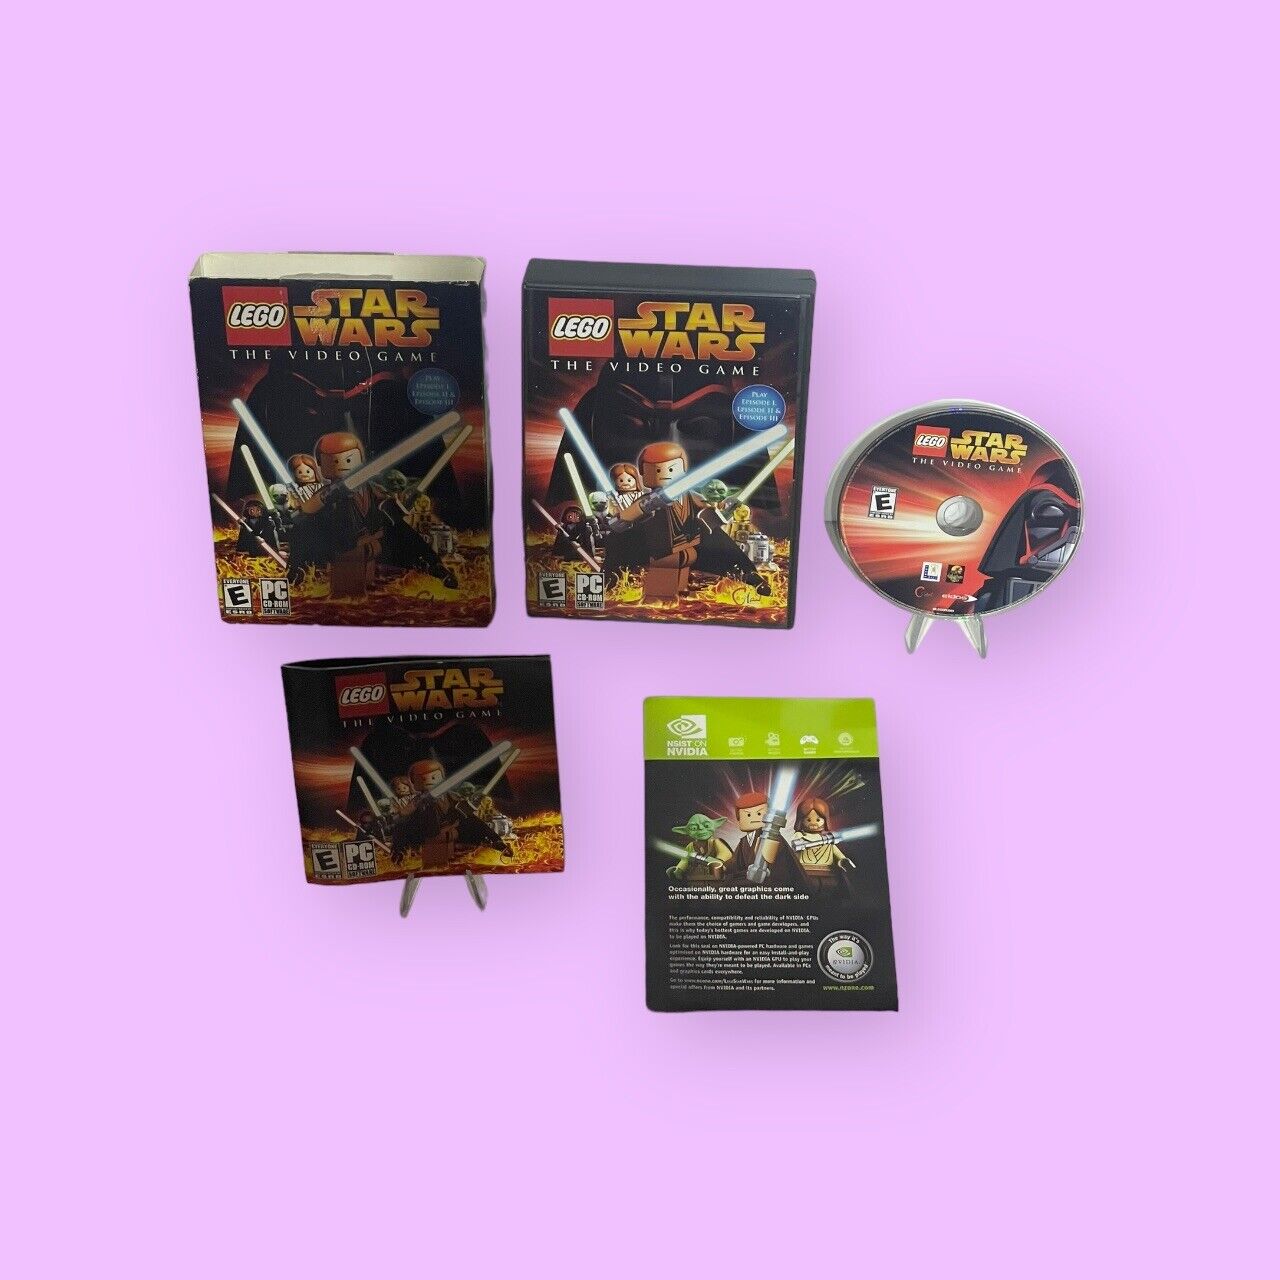 LEGO Star Wars Episode 1 2 3 PC 2005 XP Win Lucas Arts Eidos Manual + Disc Case